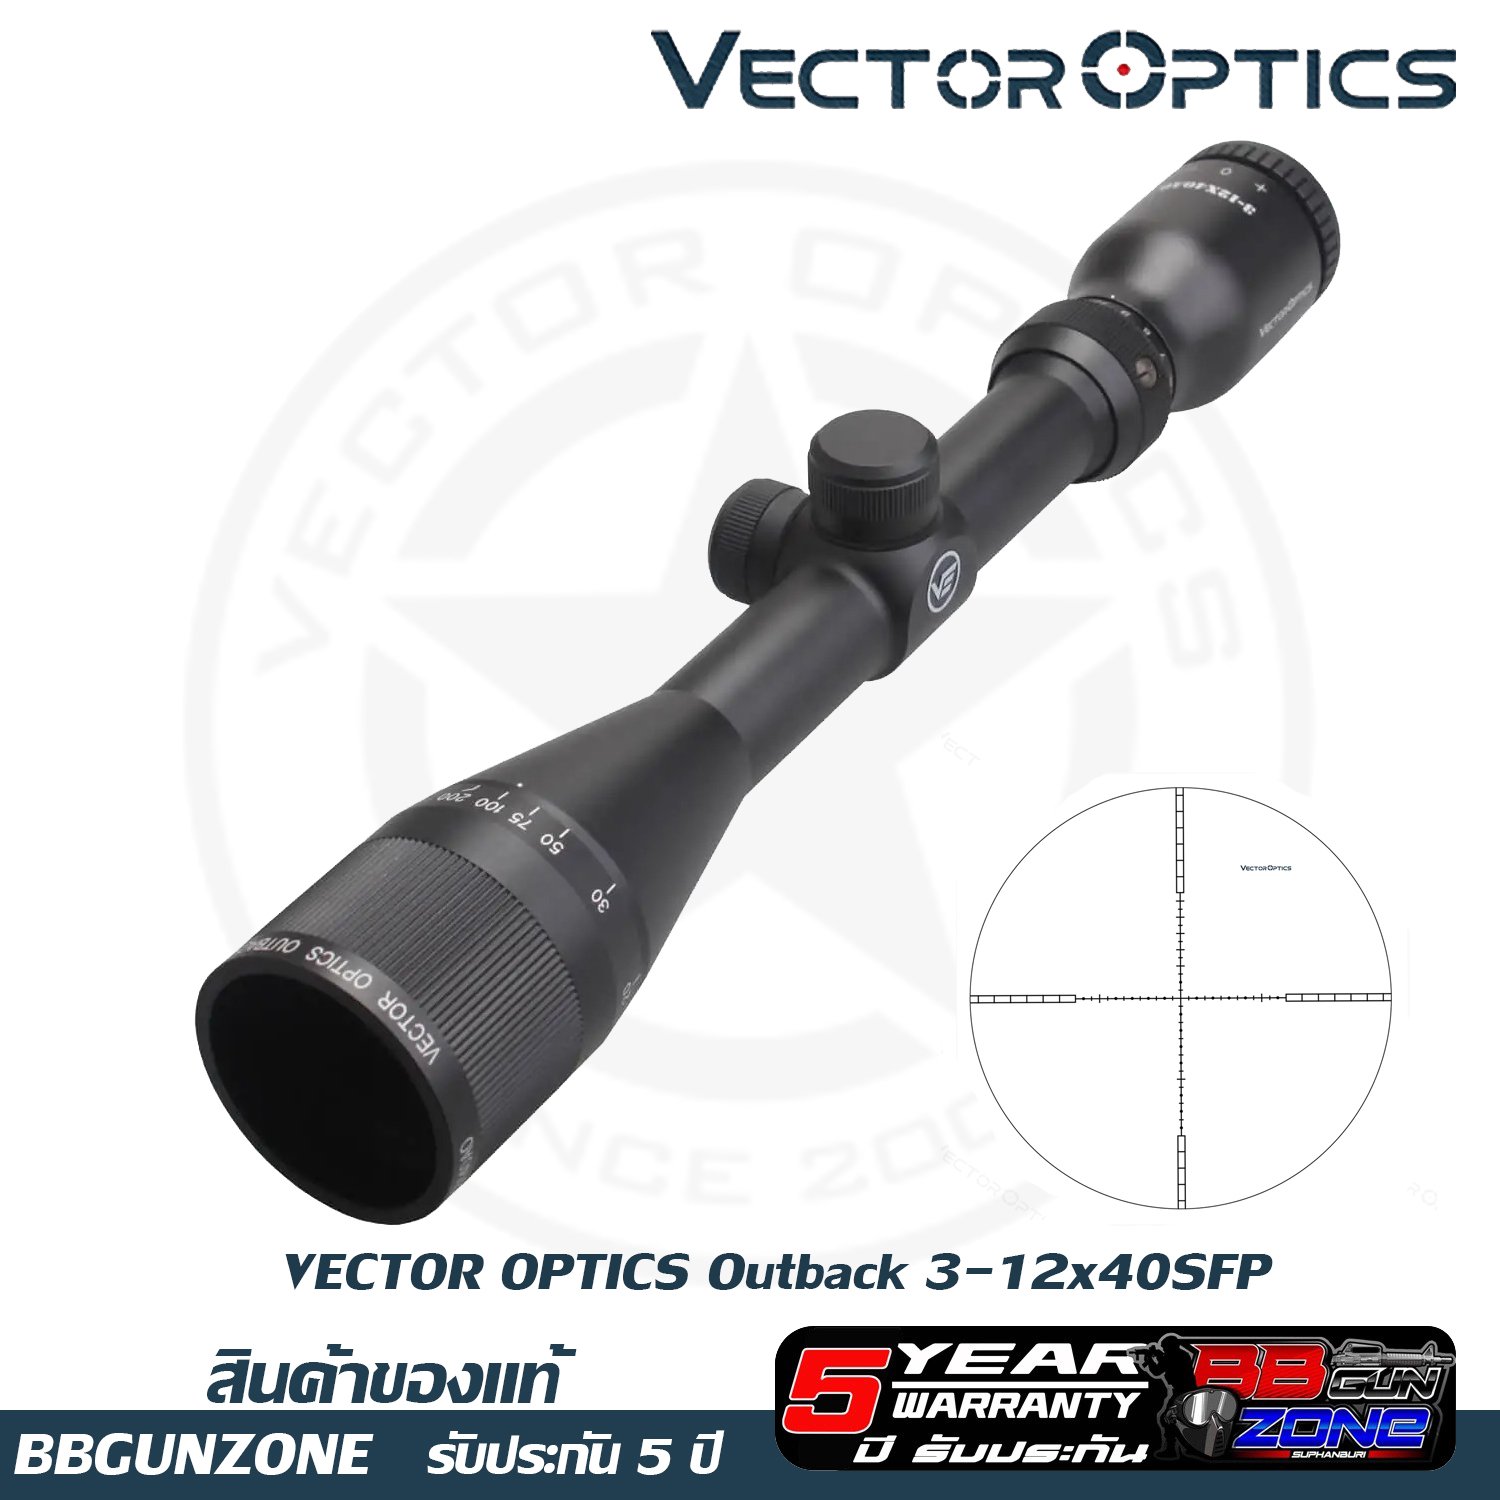 Vector Optics Outback 3-12x40 SFP